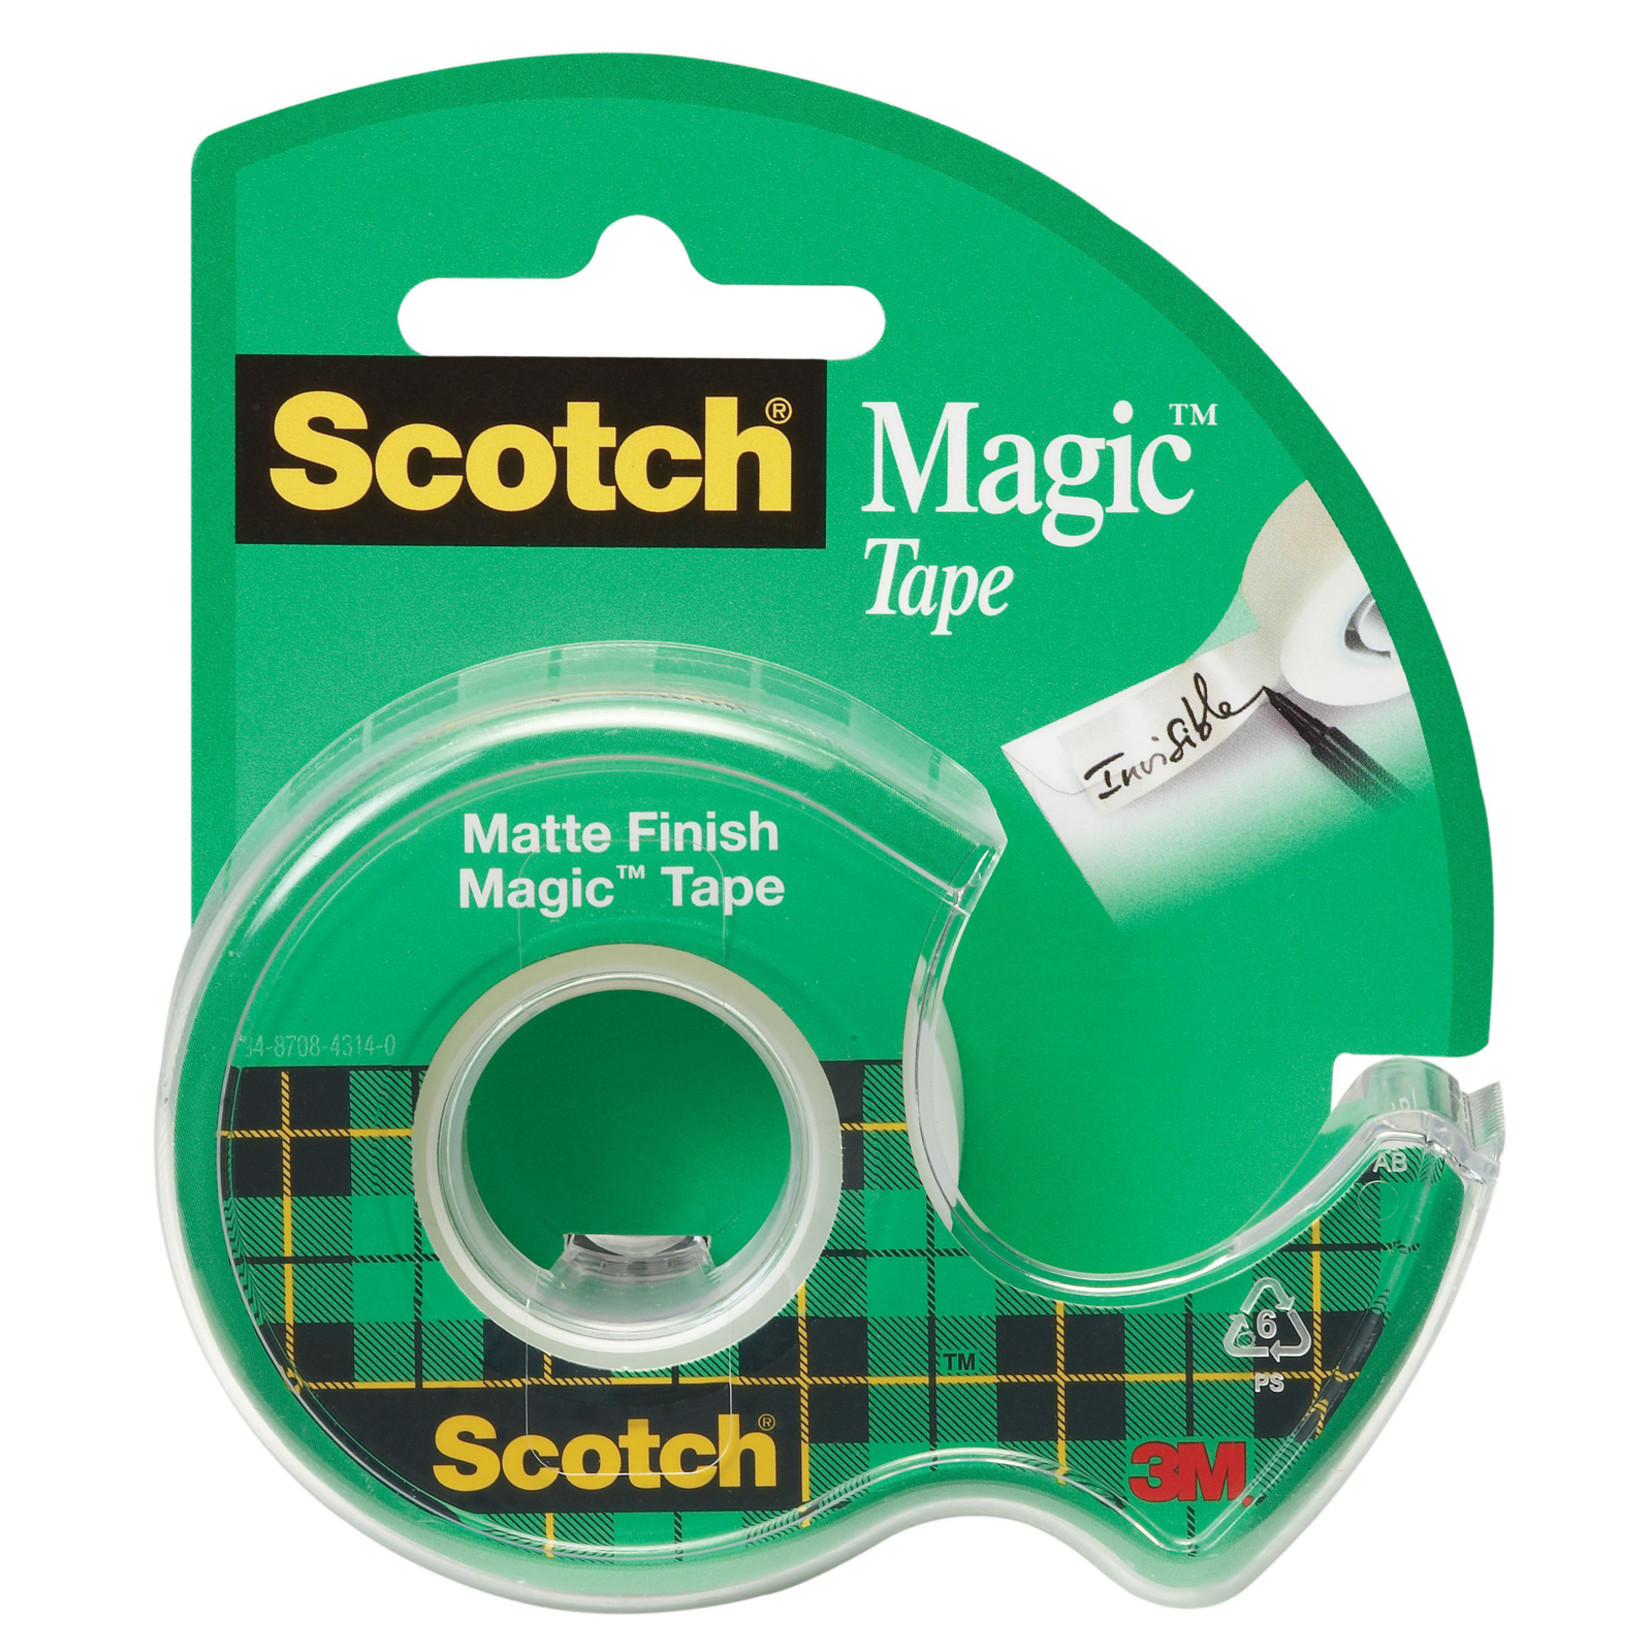 3M SCOTCH MAGIC TAPE MATTE FINISH 3/4" X 300"